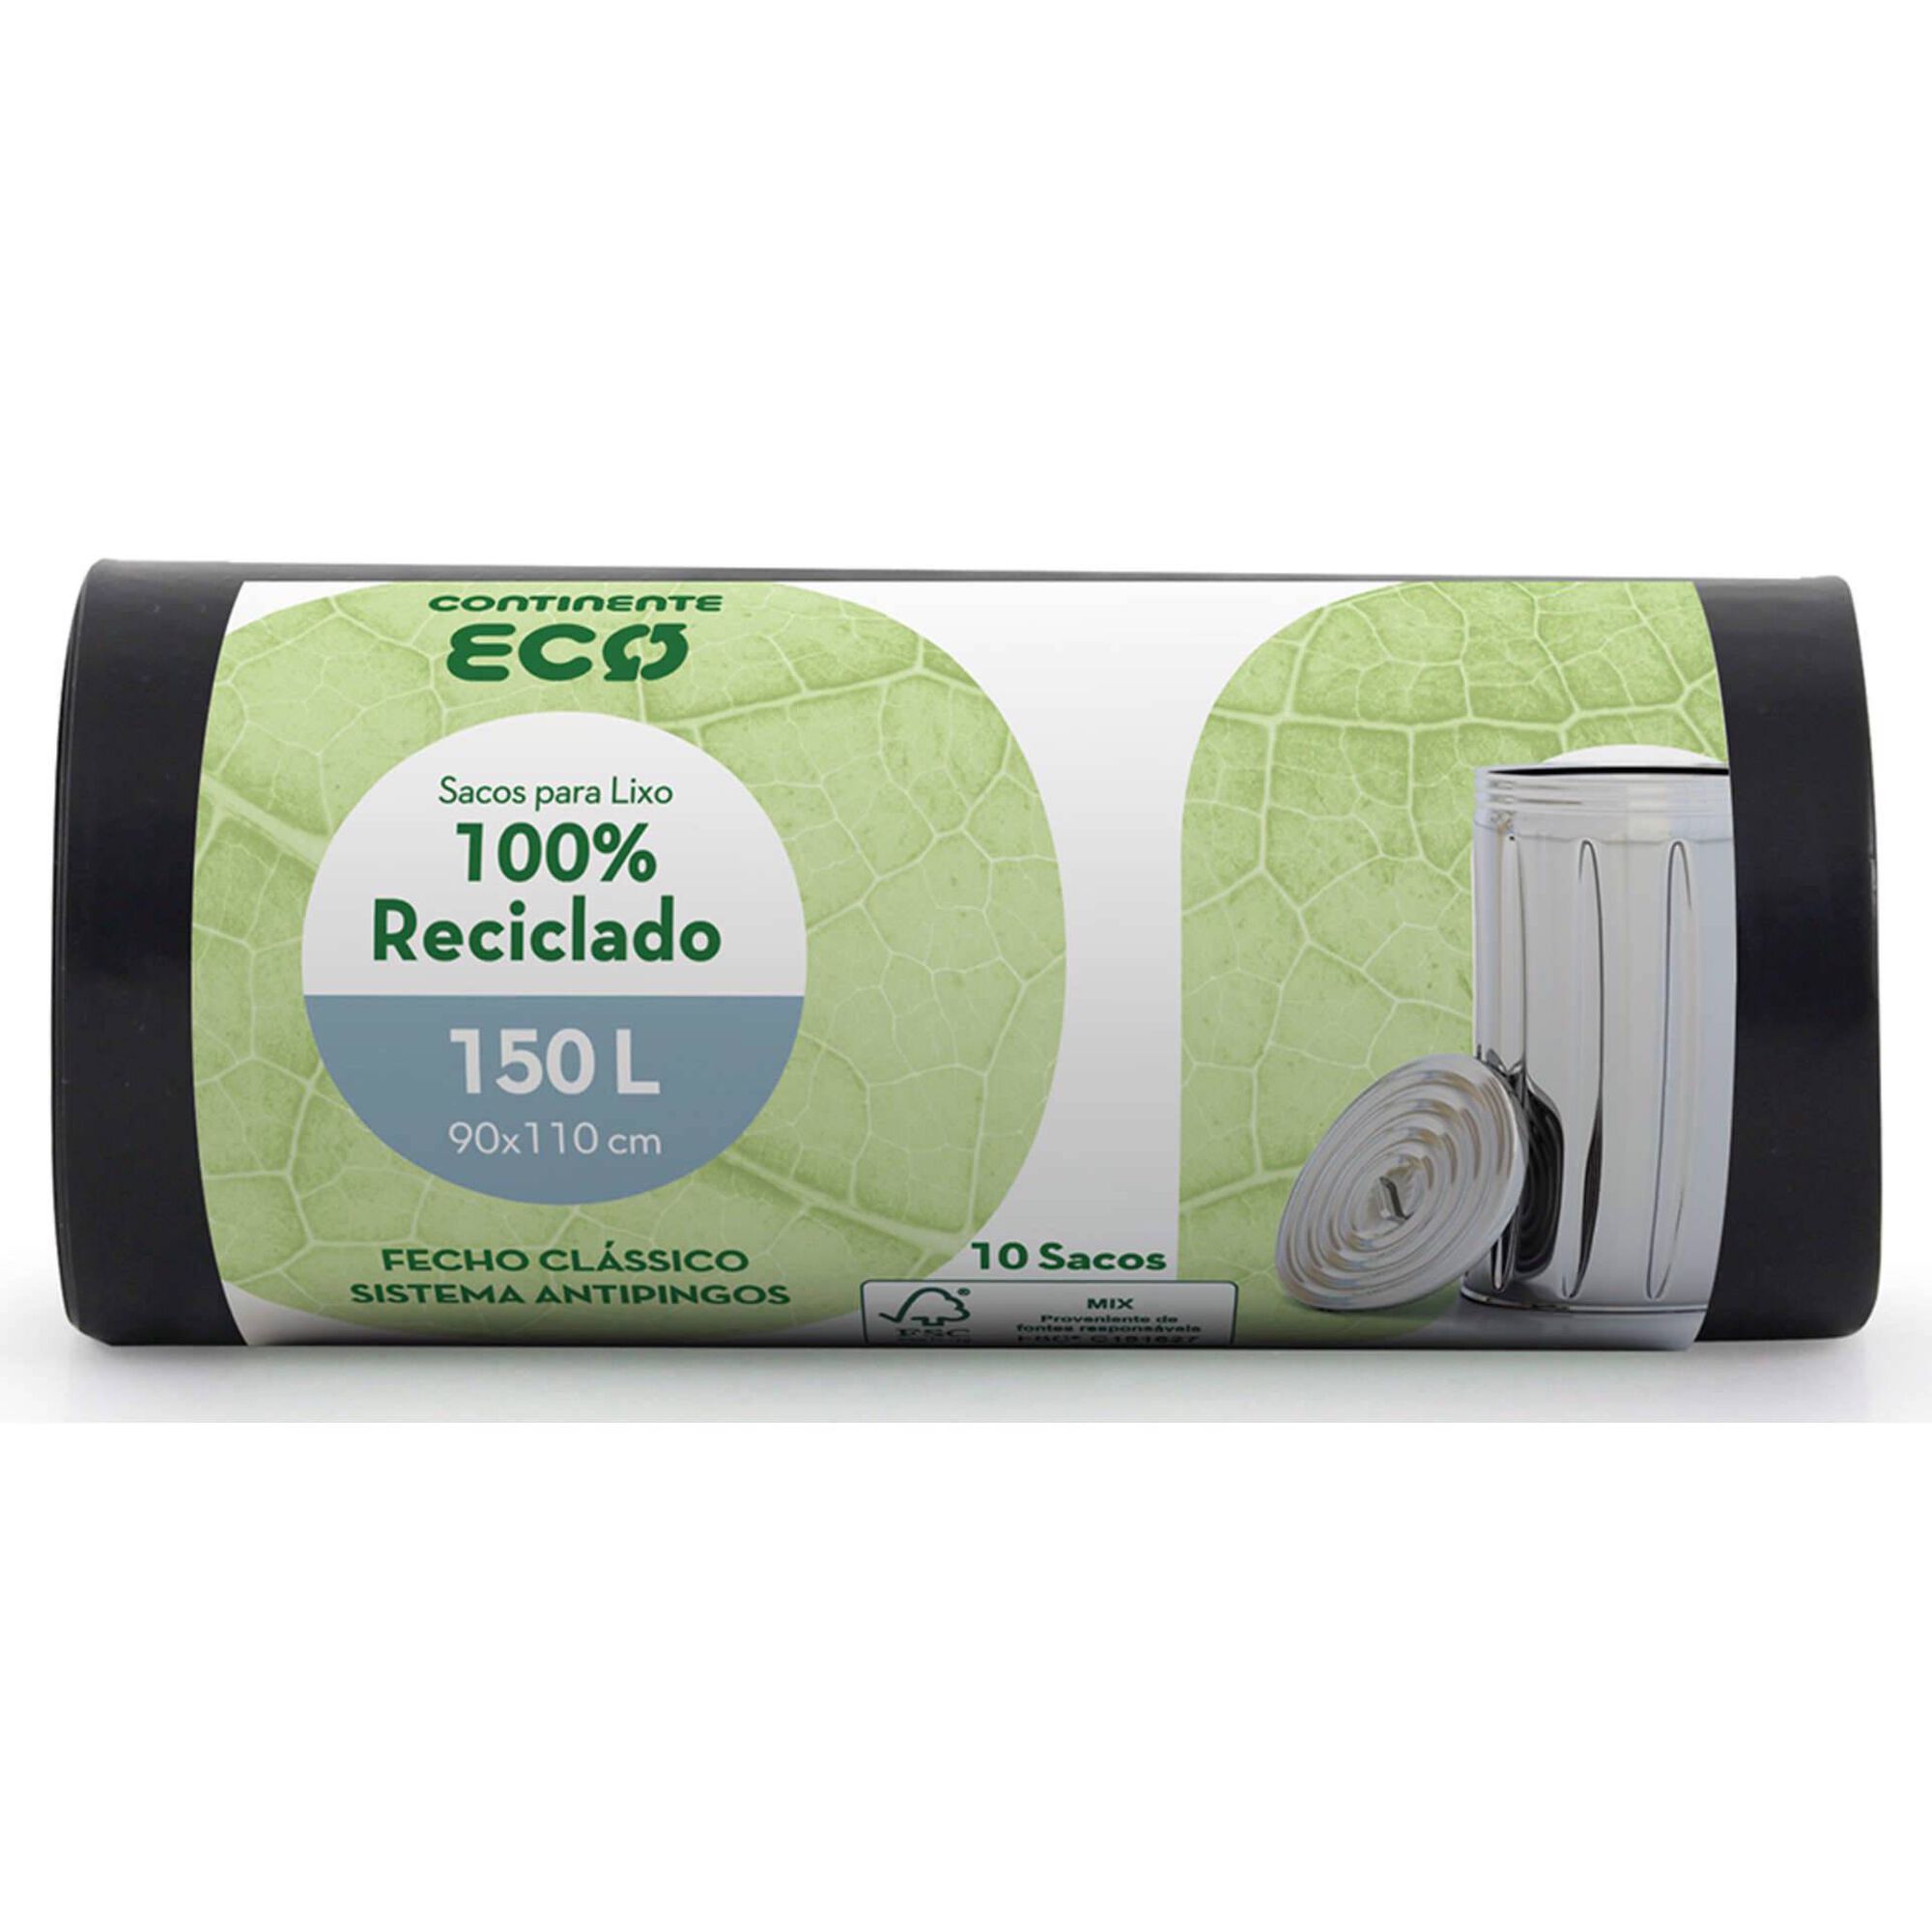 Sacos Lixo 100% Reciclado Fecho Clássico 150 lt